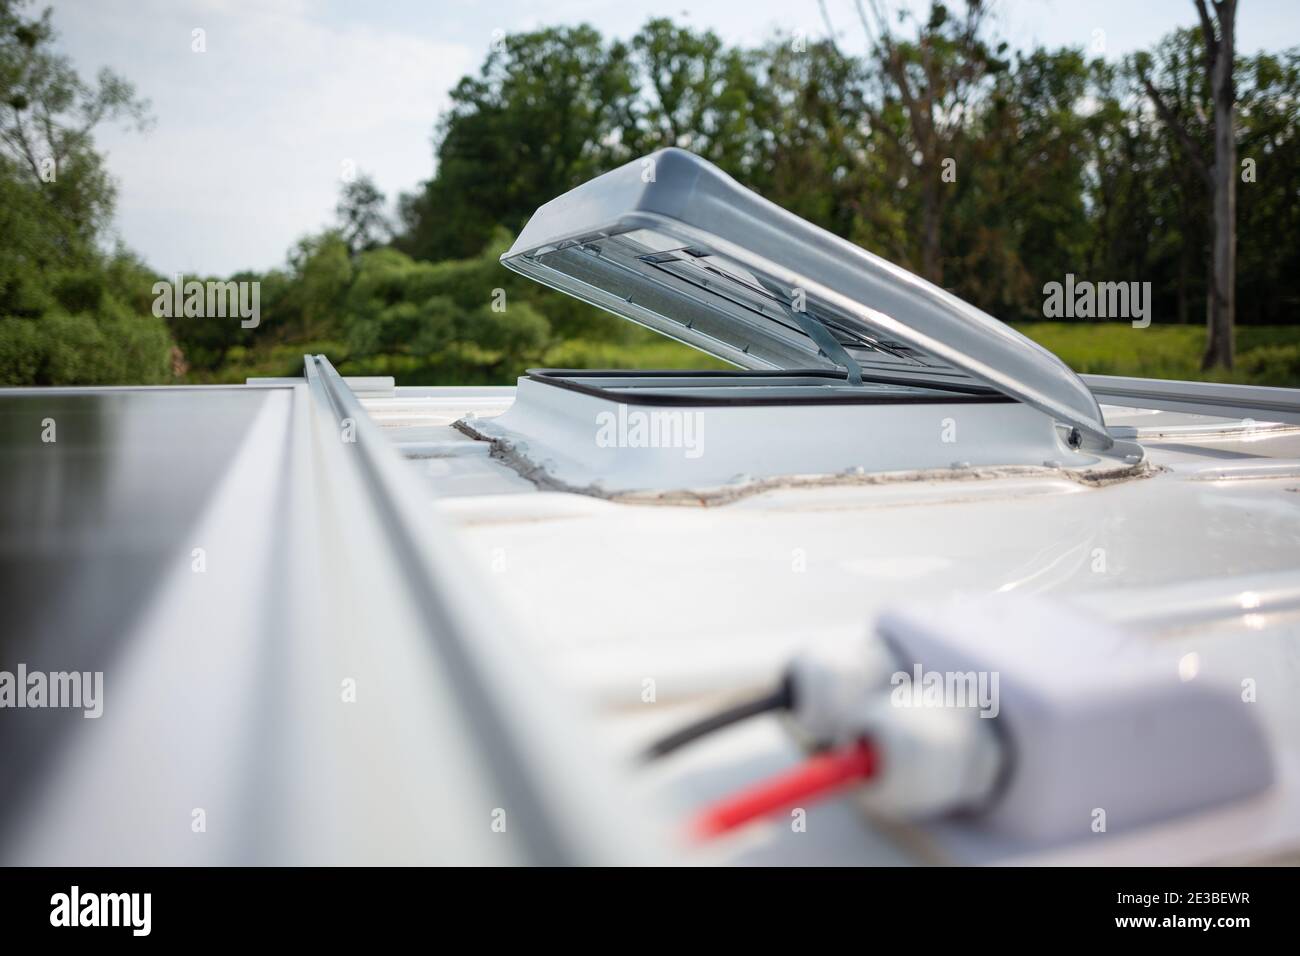 Open roof hatch on a camper van Stock Photo